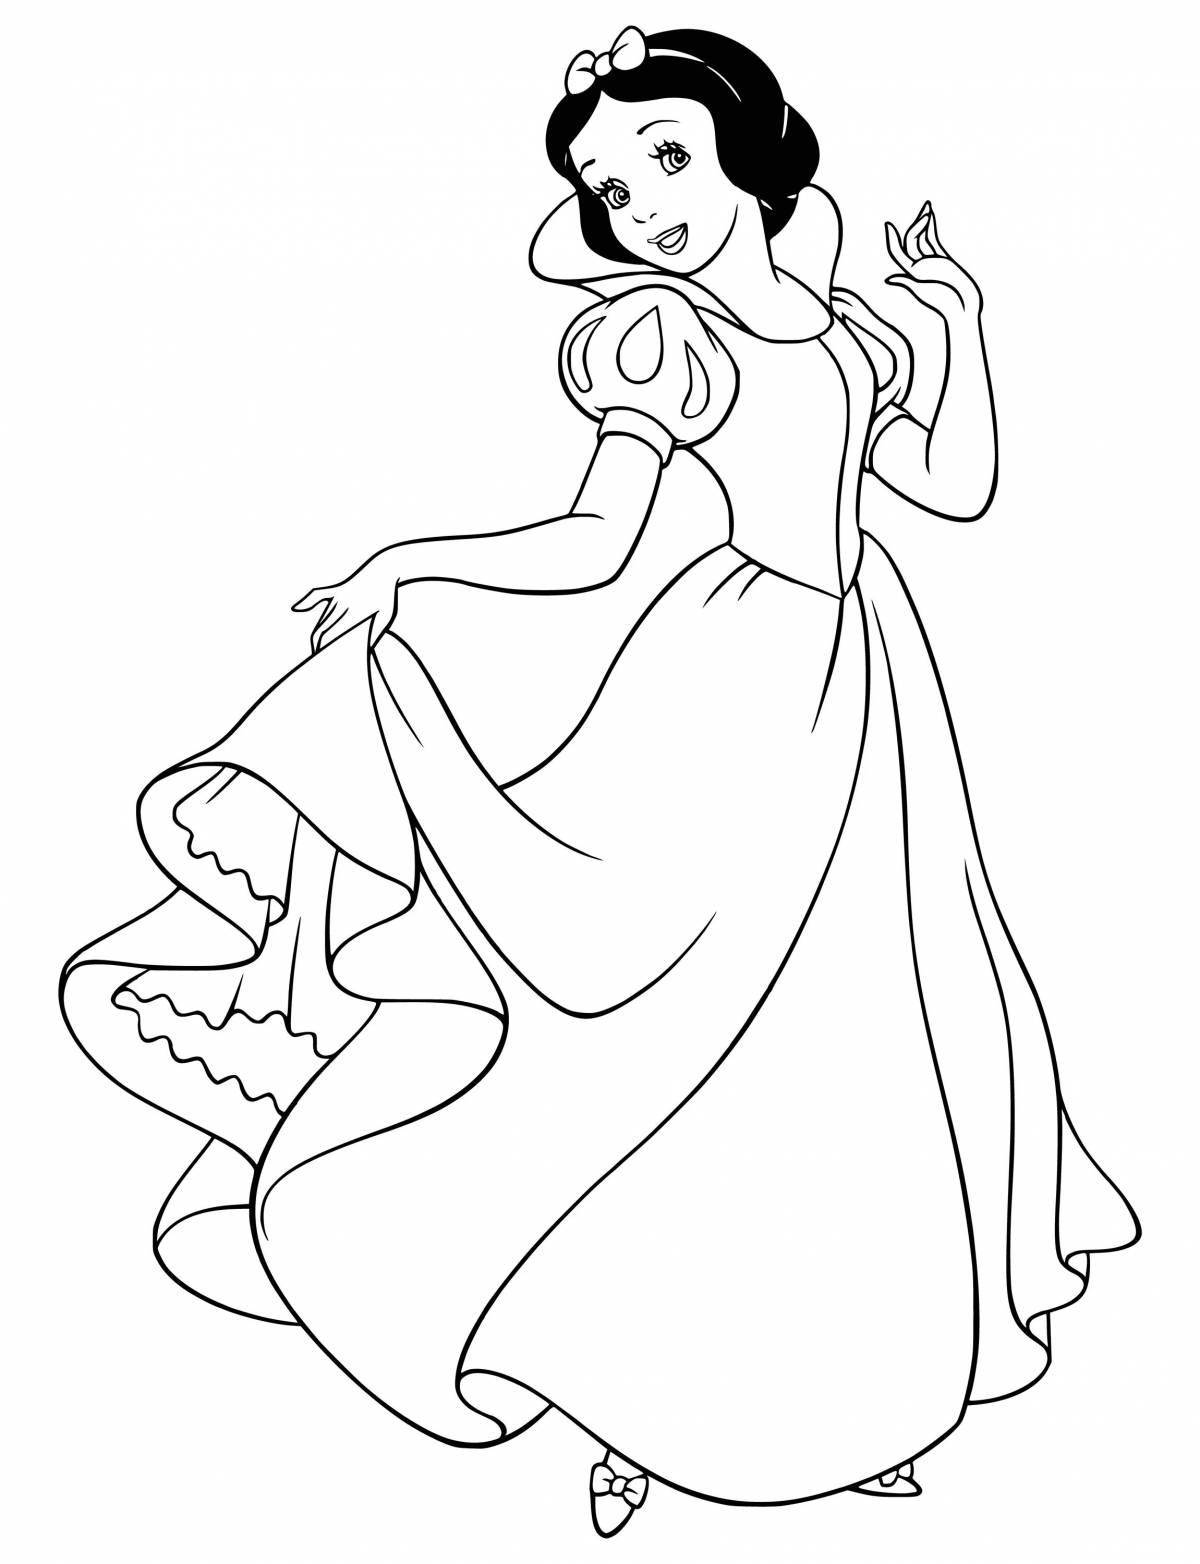 Dazzling snow white princess coloring book